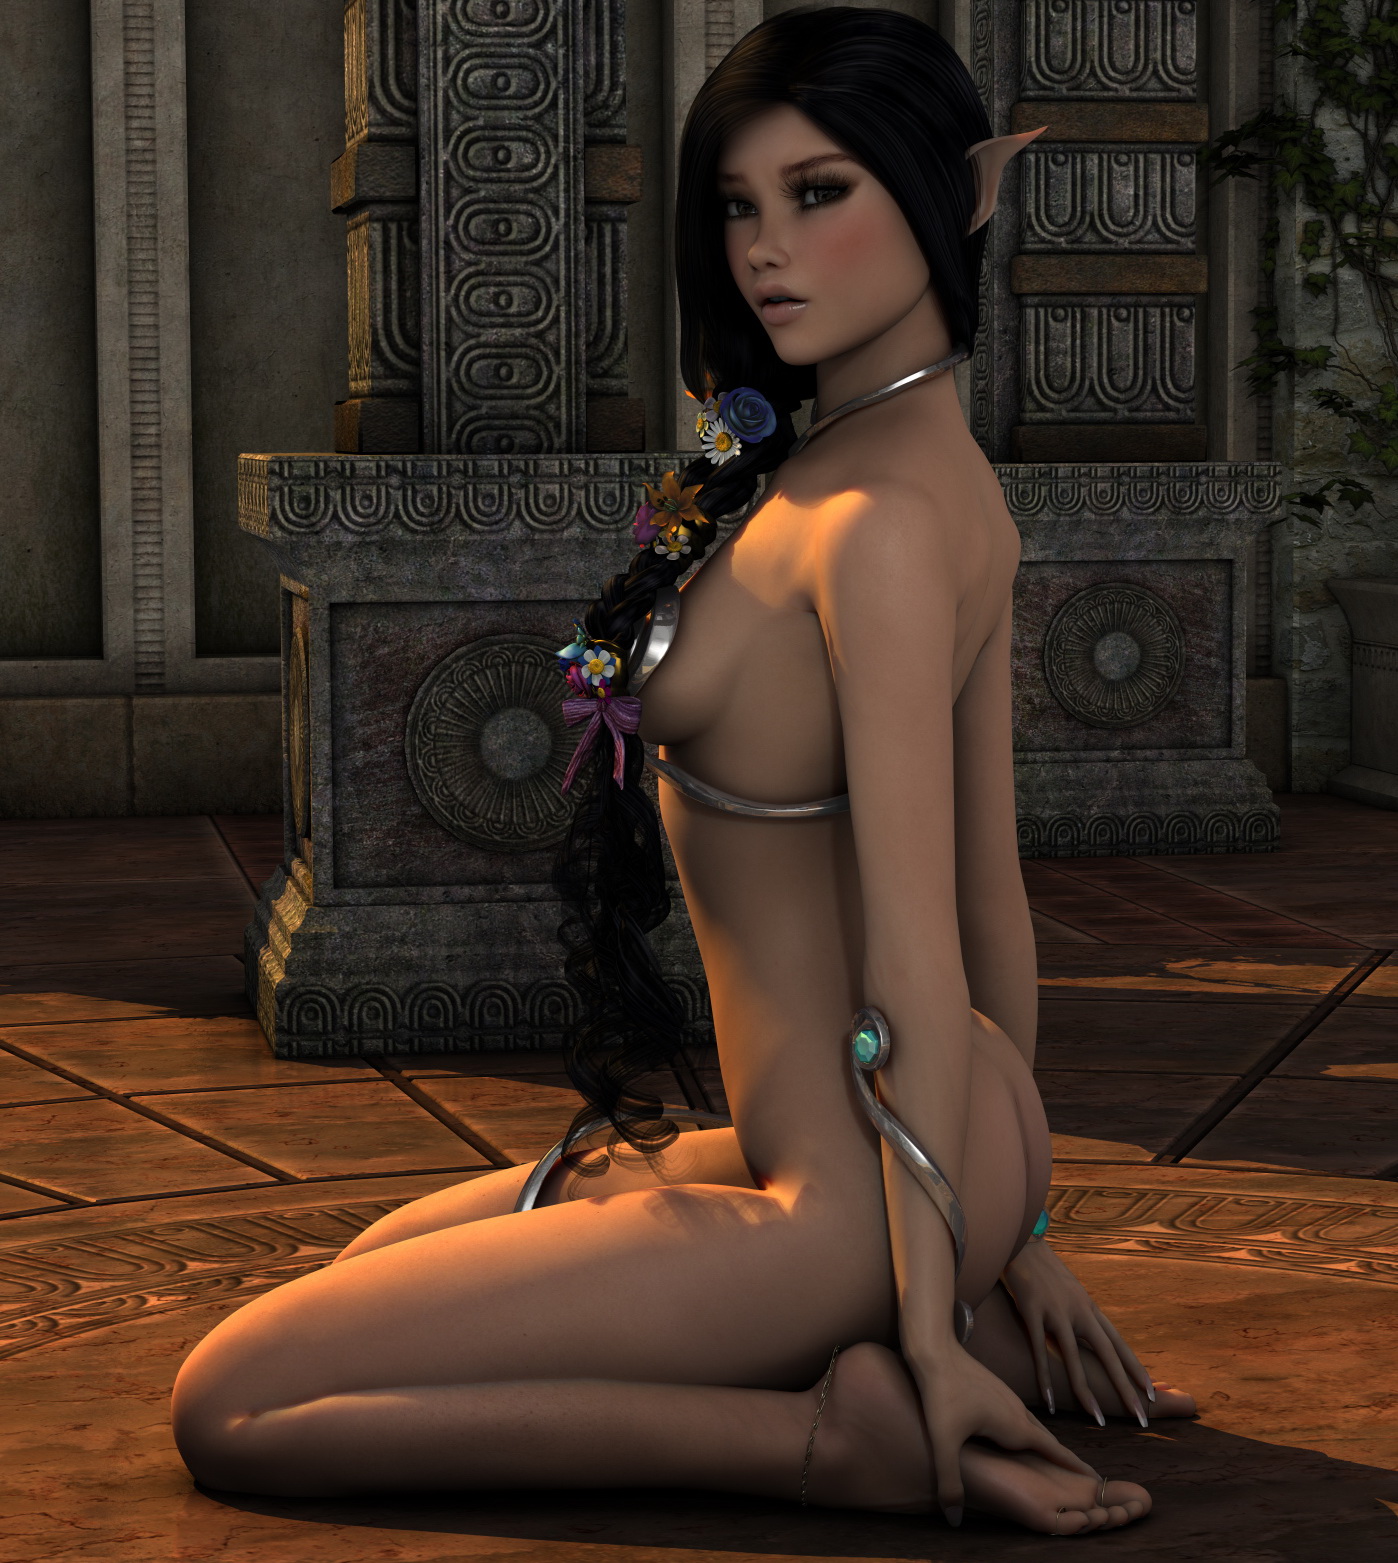 3d Elf - Alluring 3D elven girl is itching to make men dream of her